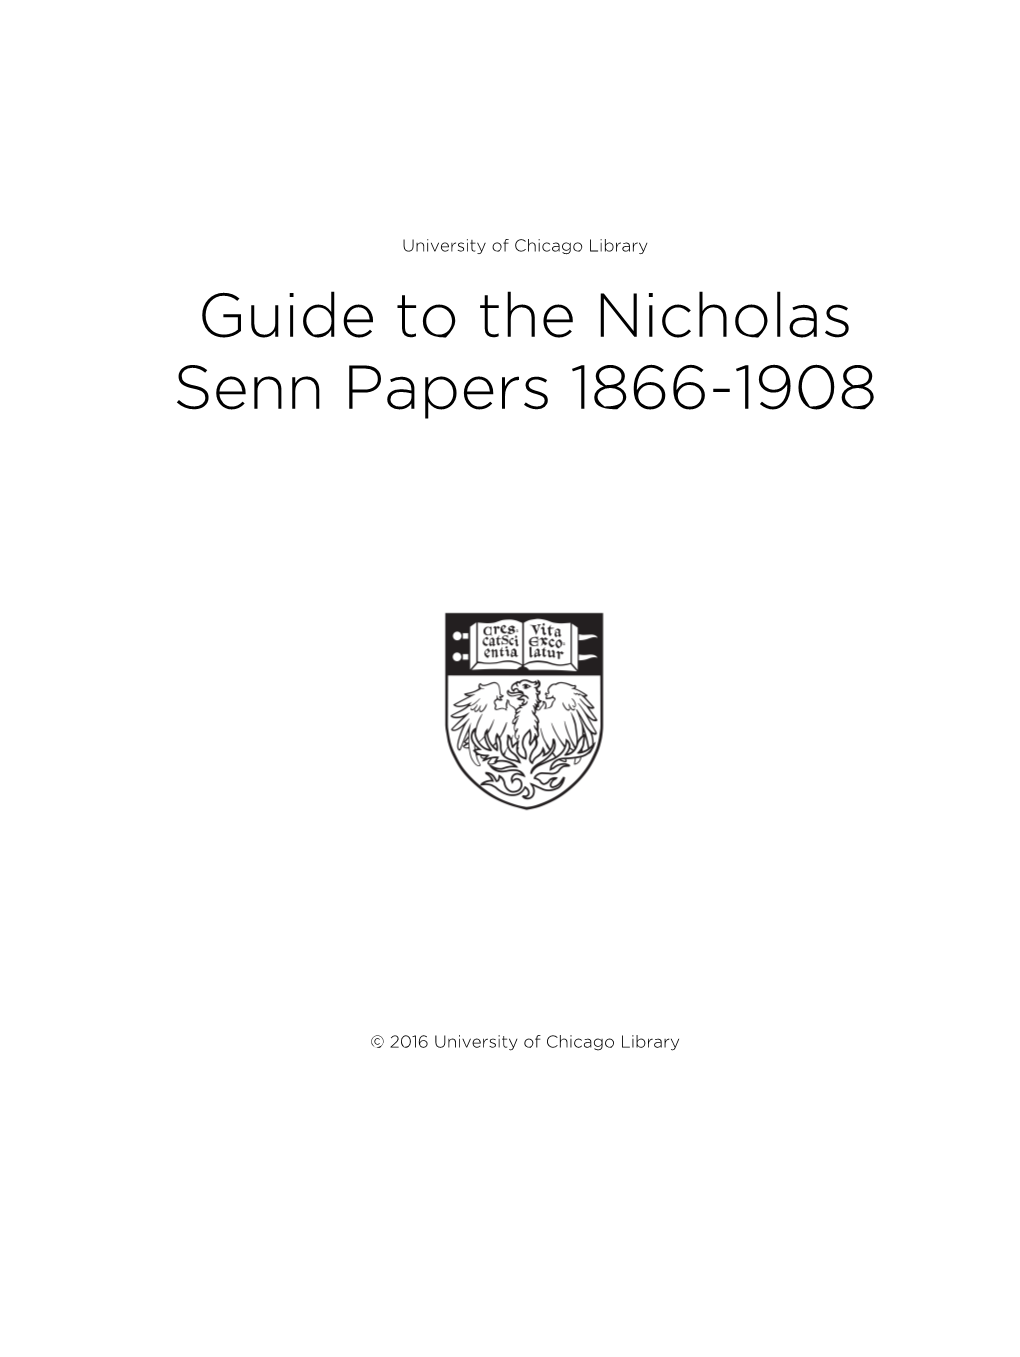 Guide to the Nicholas Senn Papers 1866-1908